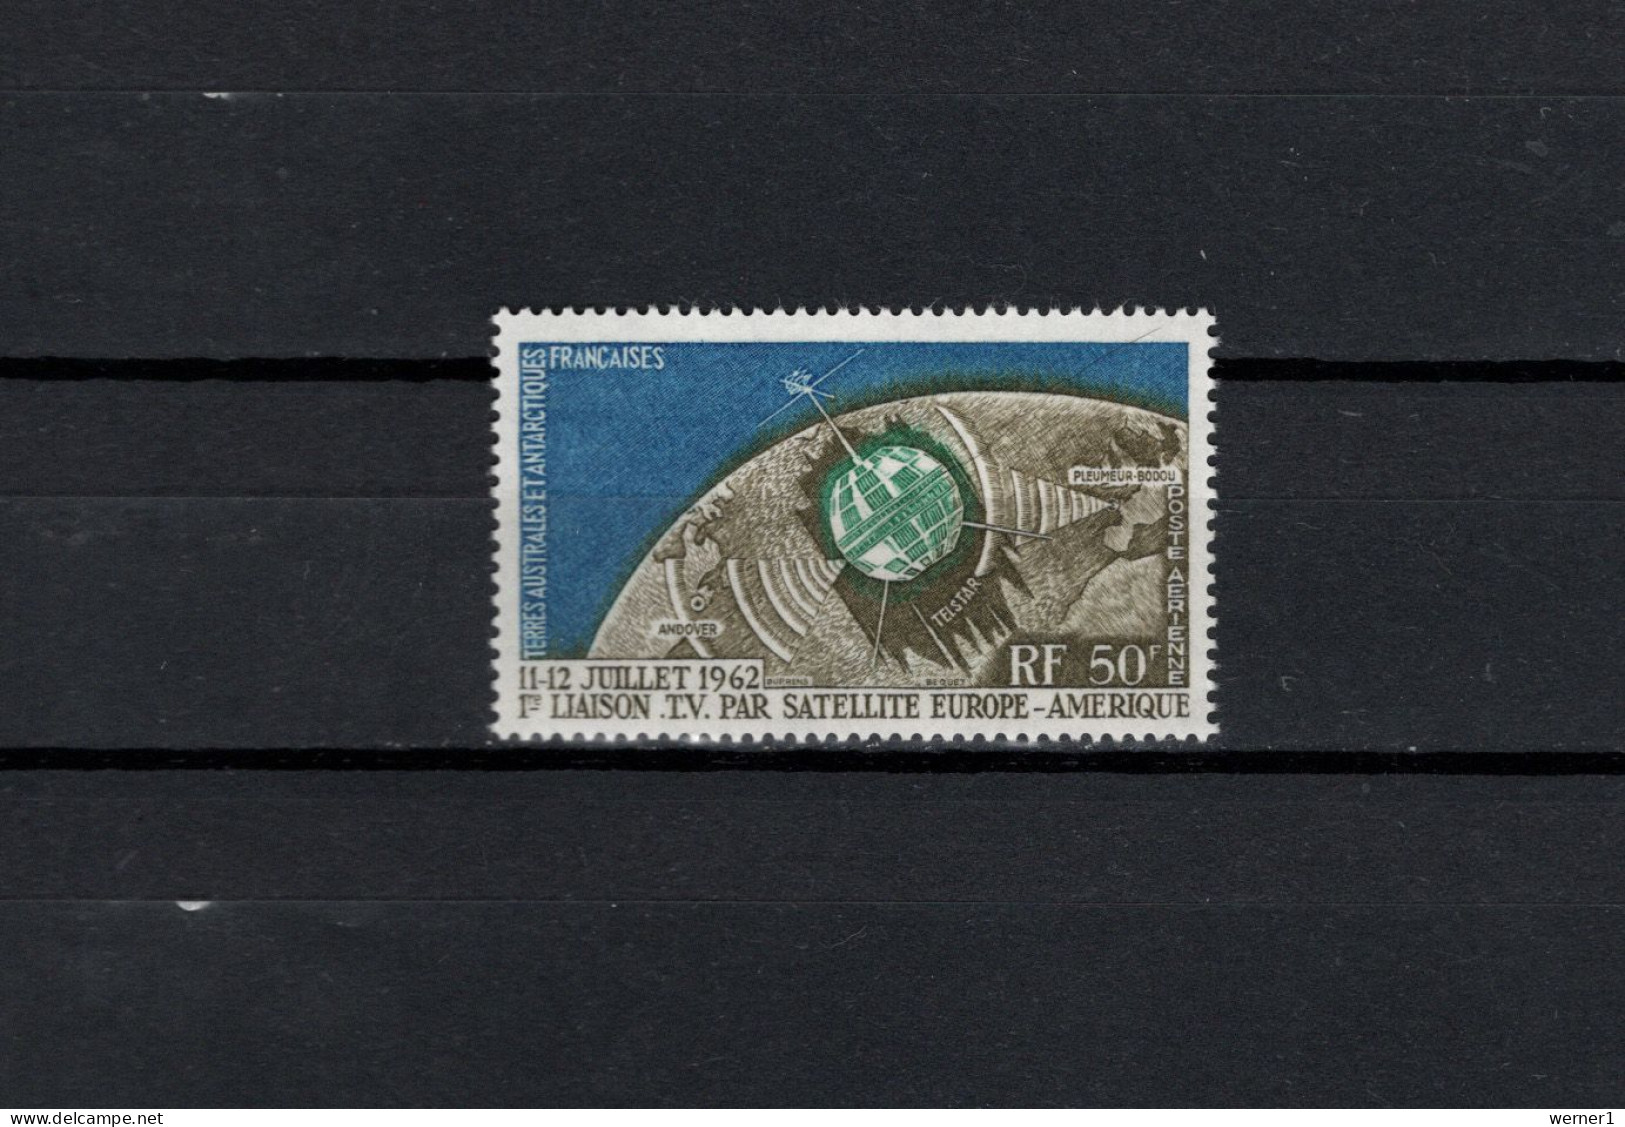 FSAT French Antarctic Territory 1962 Space Telstar Stamp MNH - Ozeanien